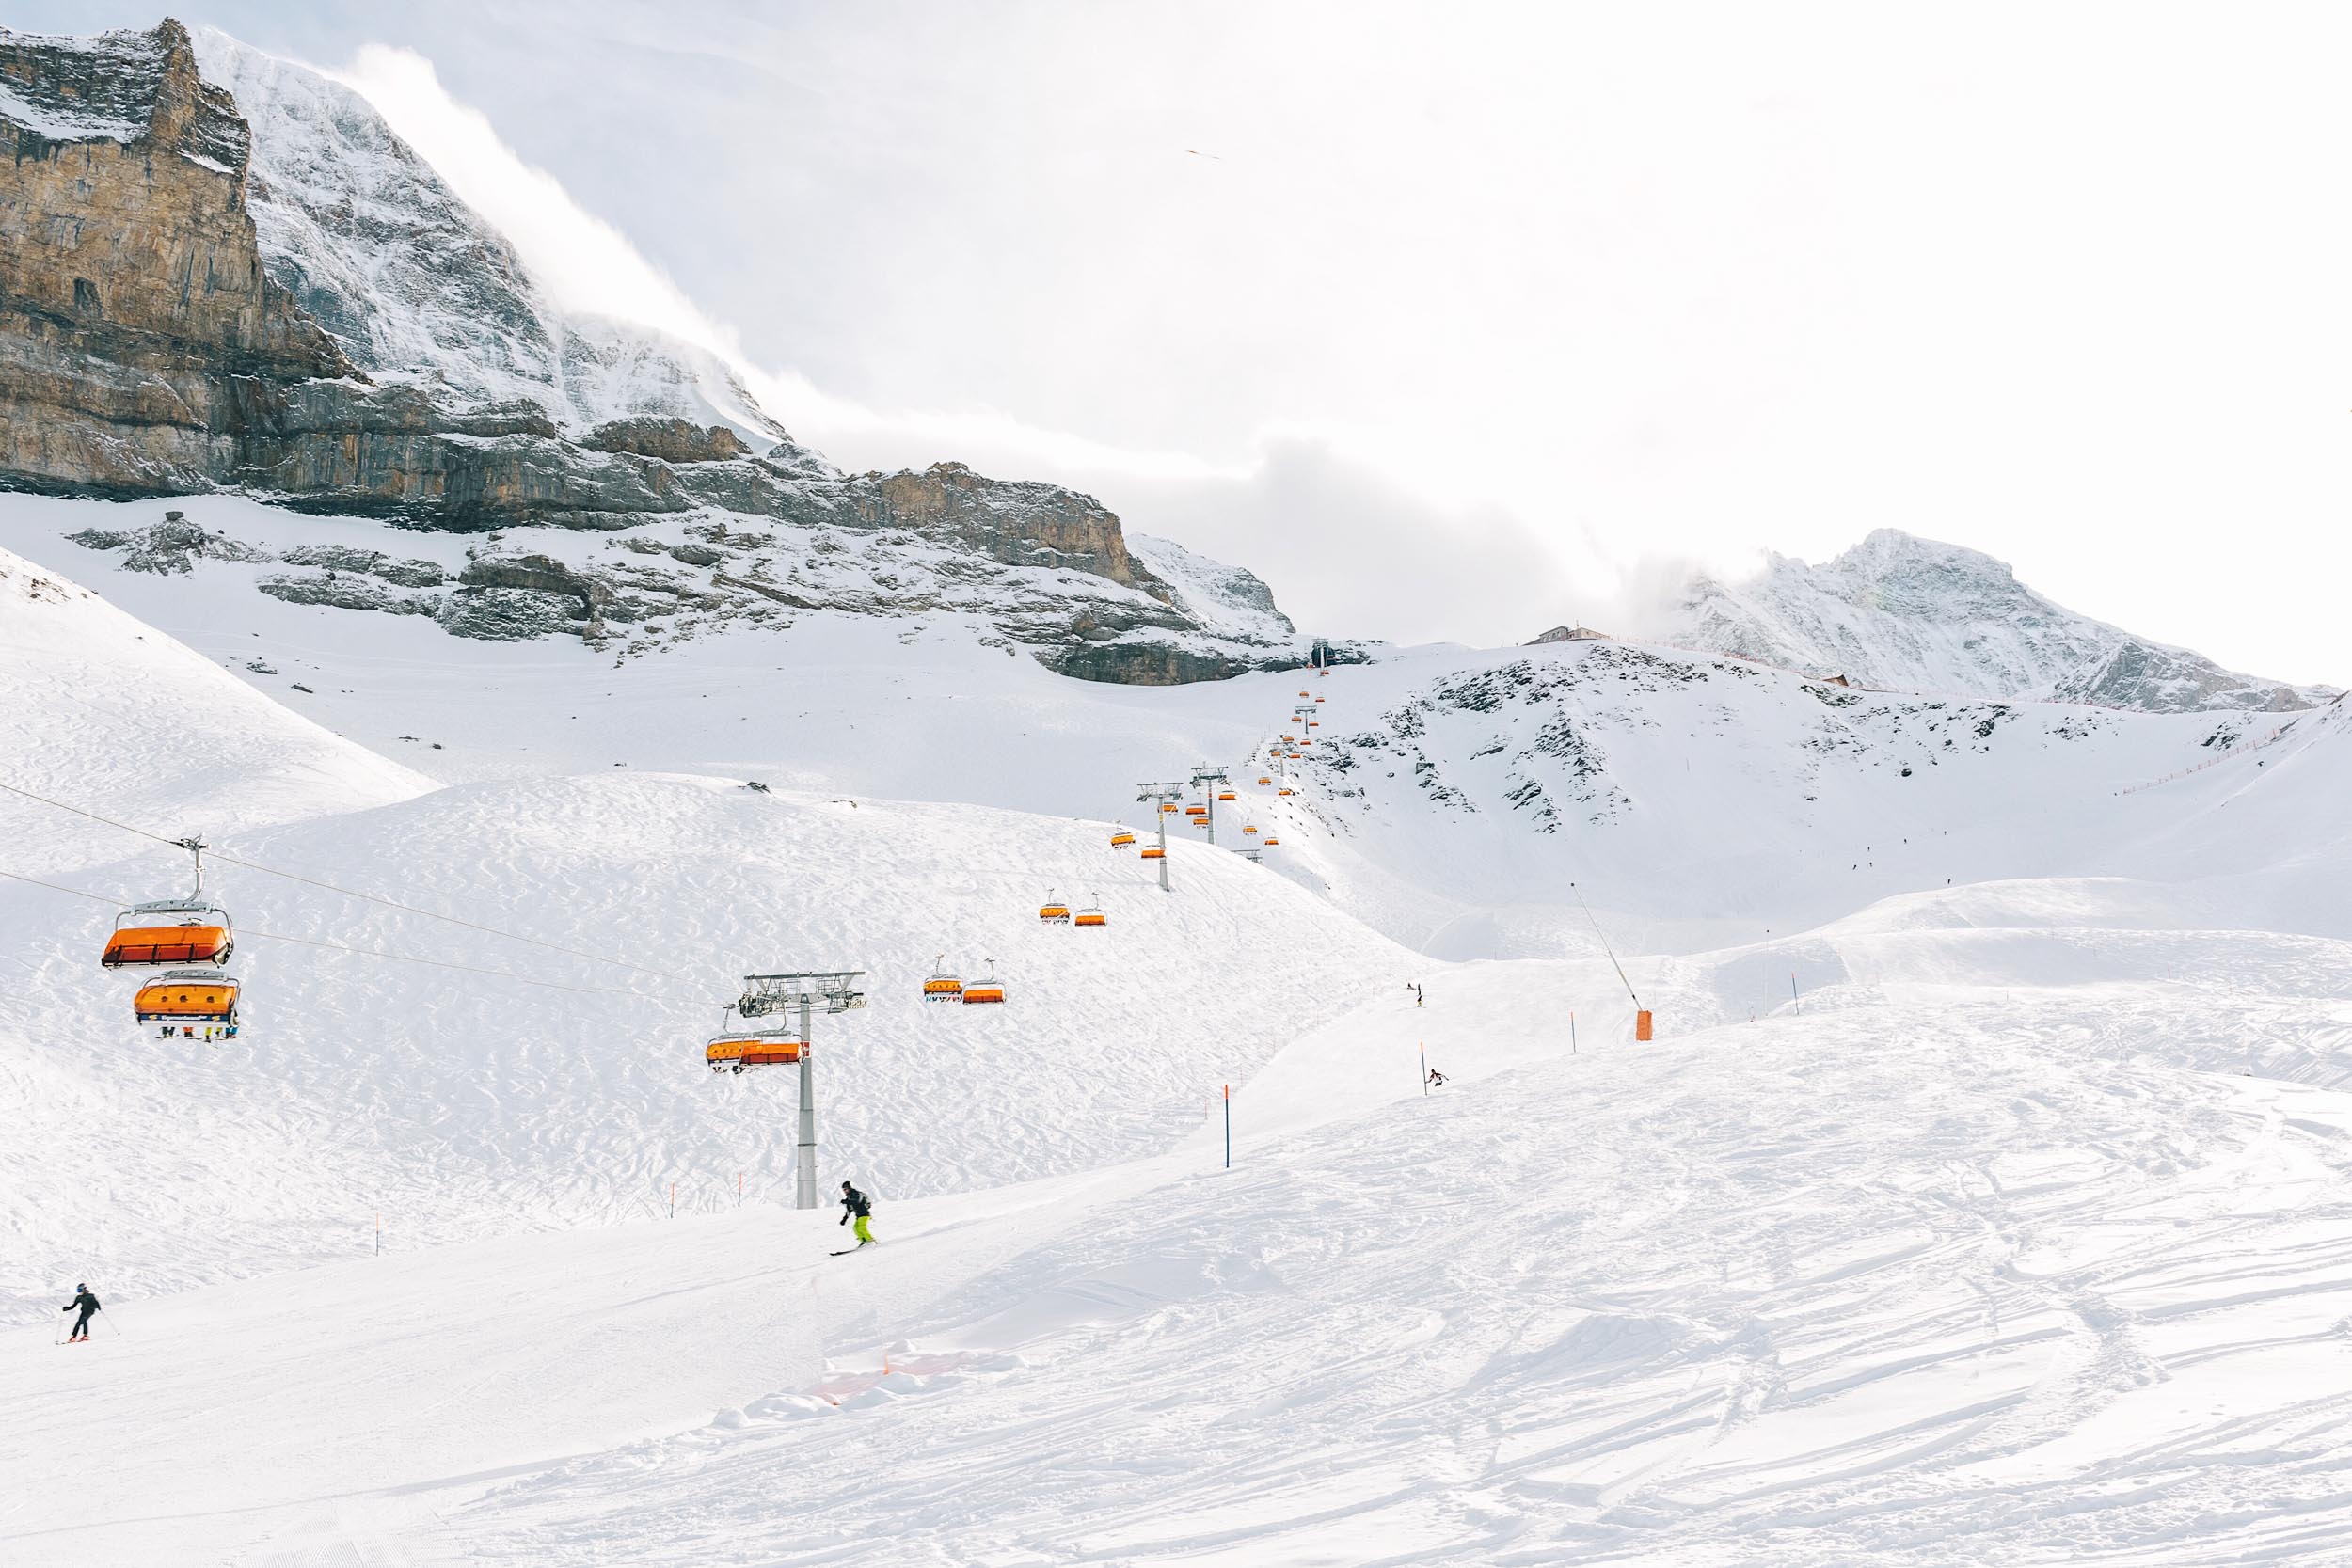 Winter adventure in the Jungfrau Region of Switzerland - skiing, sledging, hiking, and more!